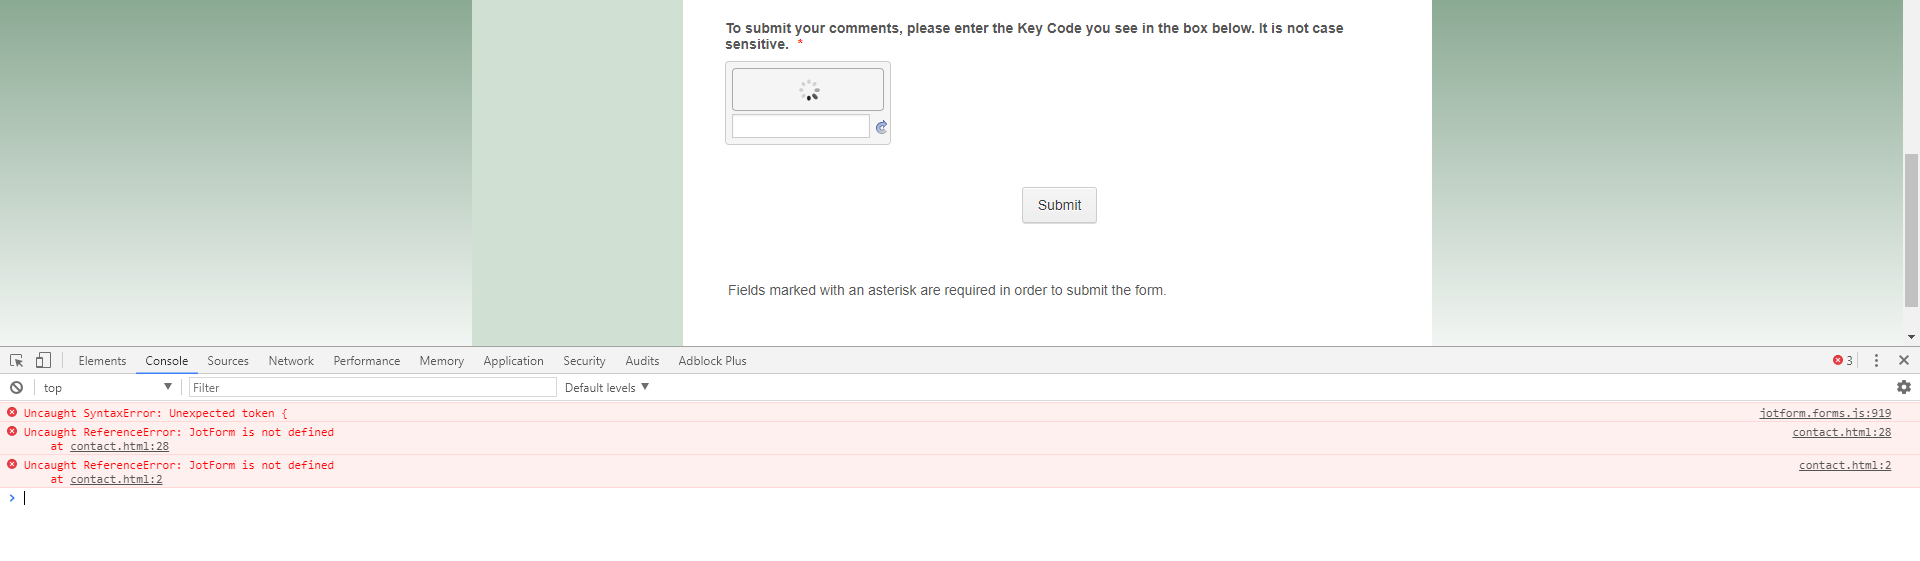 Captcha not working on forms I managed Image 1 Screenshot 20